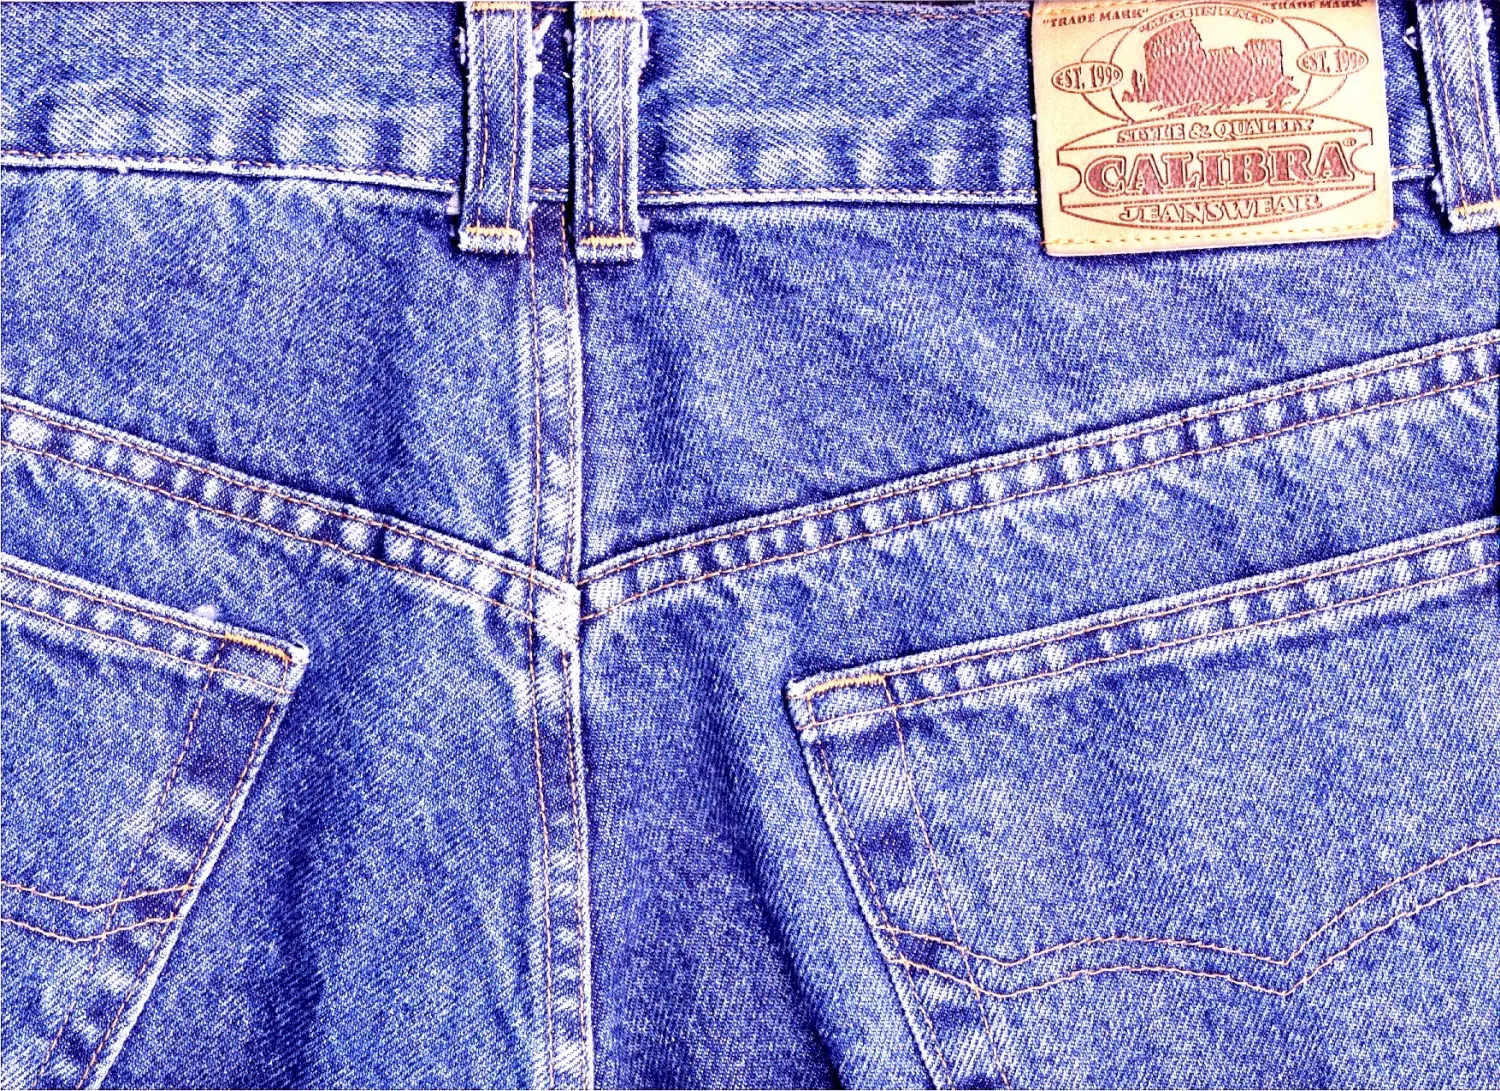 DIMOR Textilvertrieb, Calibra Blaue Jeans